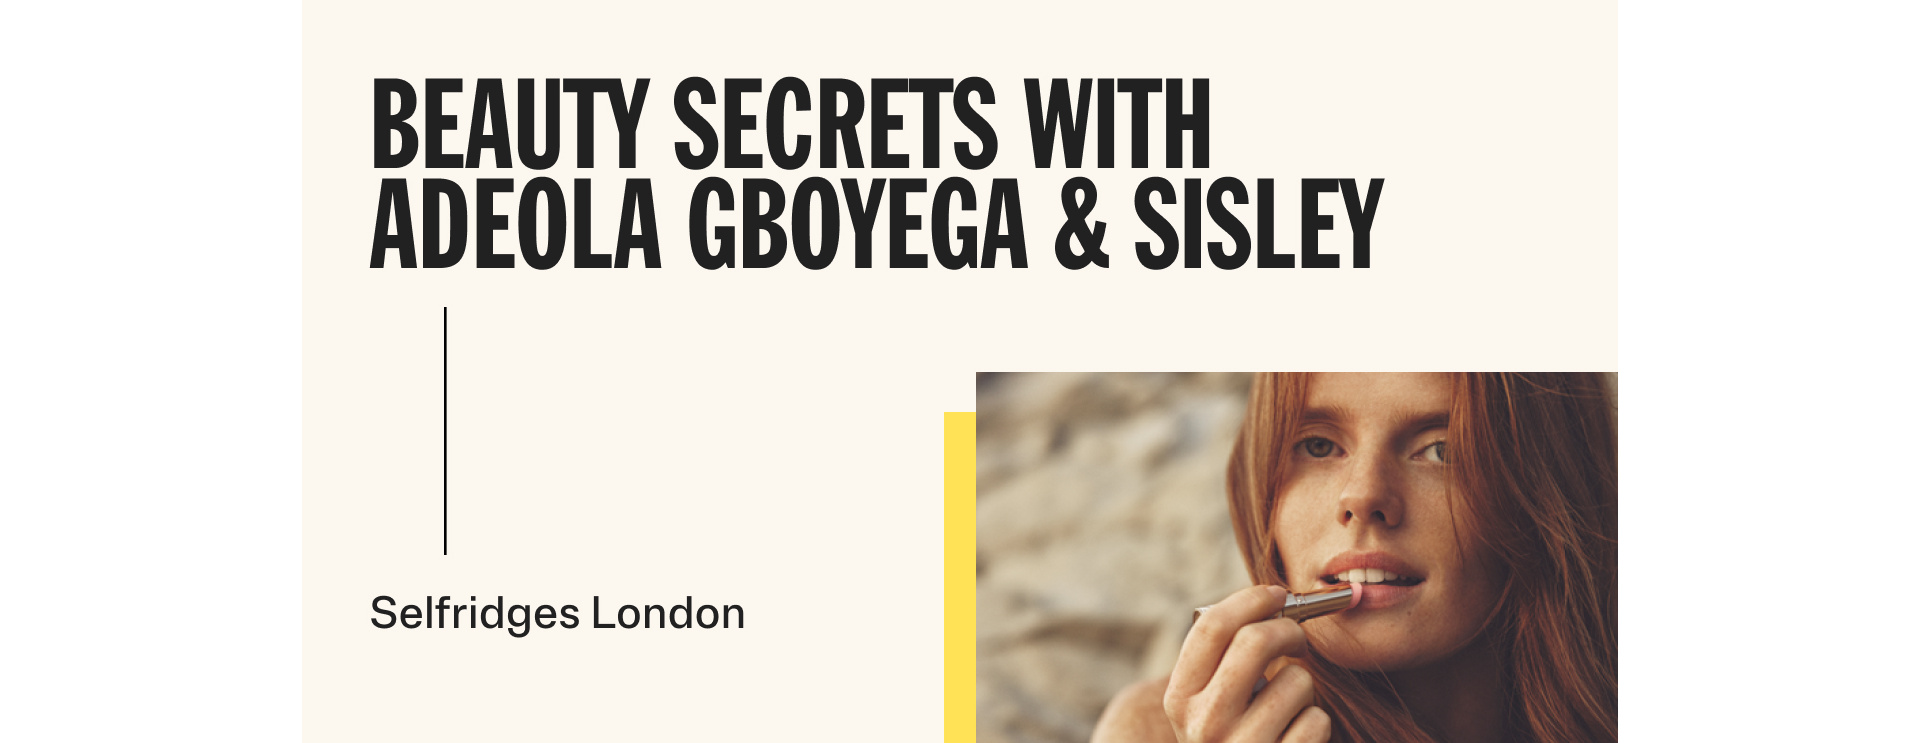 Beauty secrets with Adeloa Gboyega and Sisley